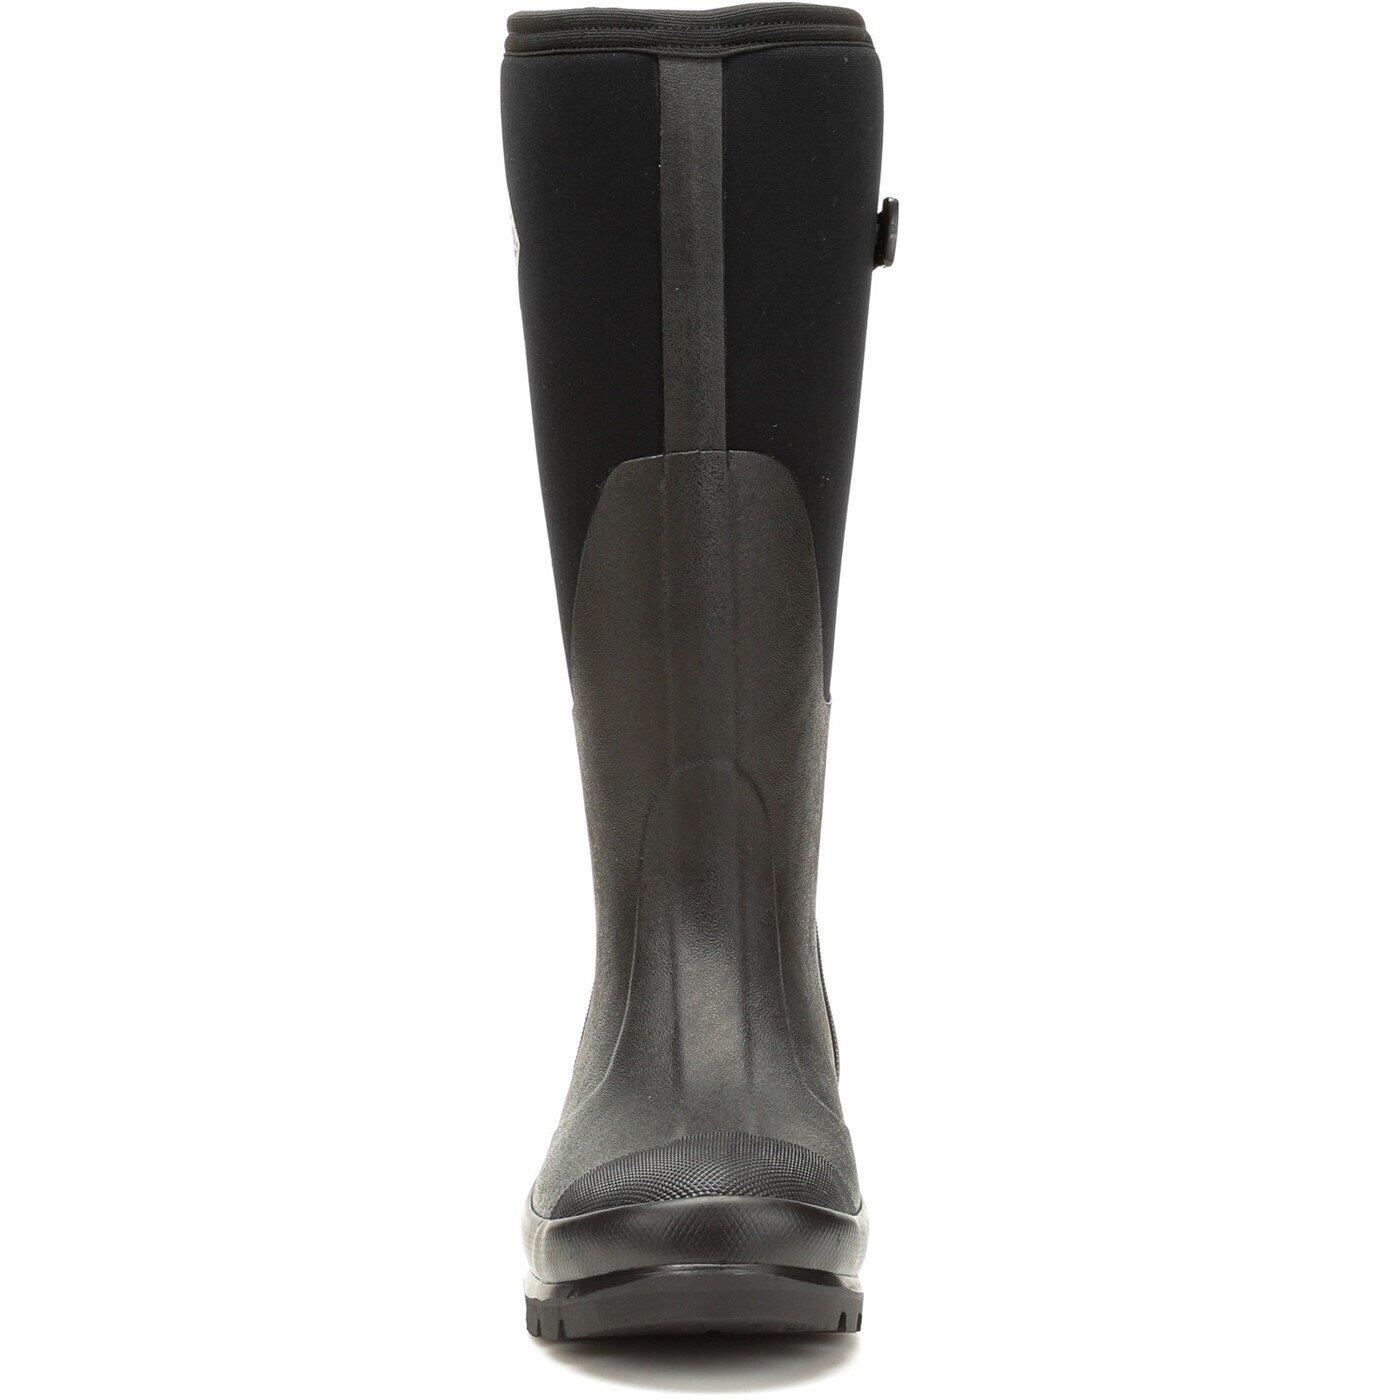 MUCK BOOTS Womens Chore Adjustable Tall Wellington Boots (Black)